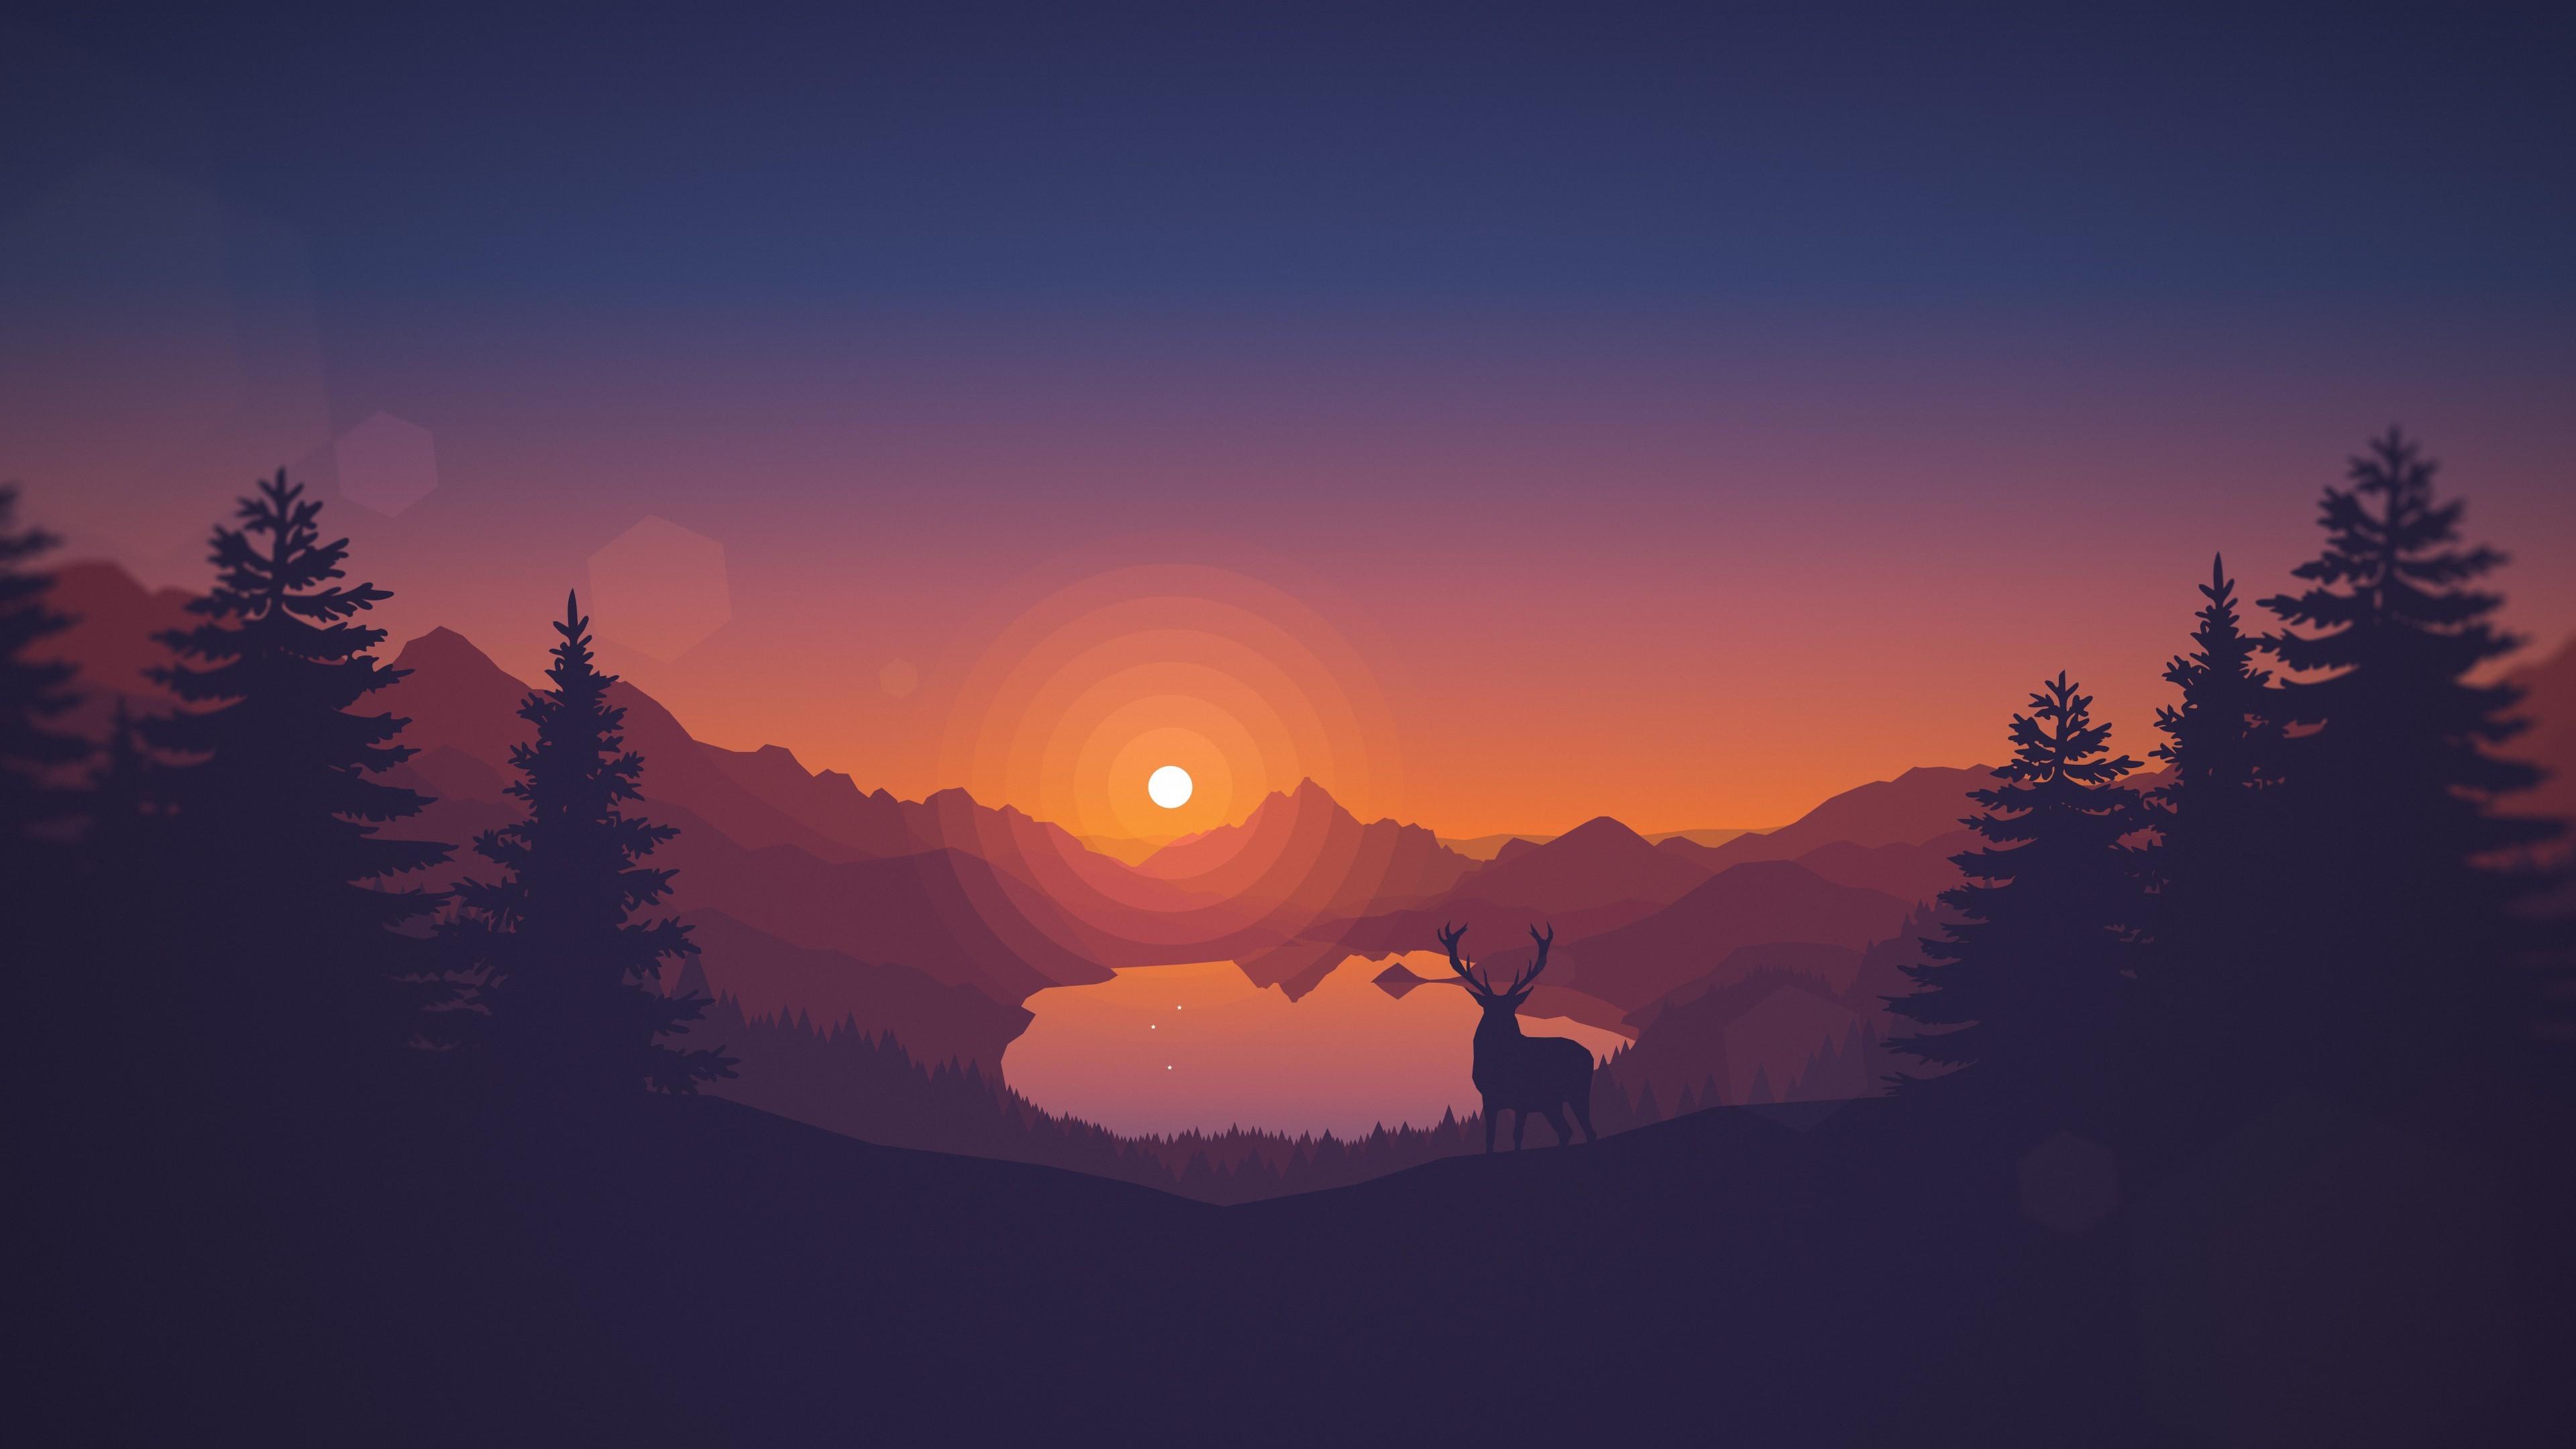 of Sunset 4K wallpaper for your desktop or mobile screen